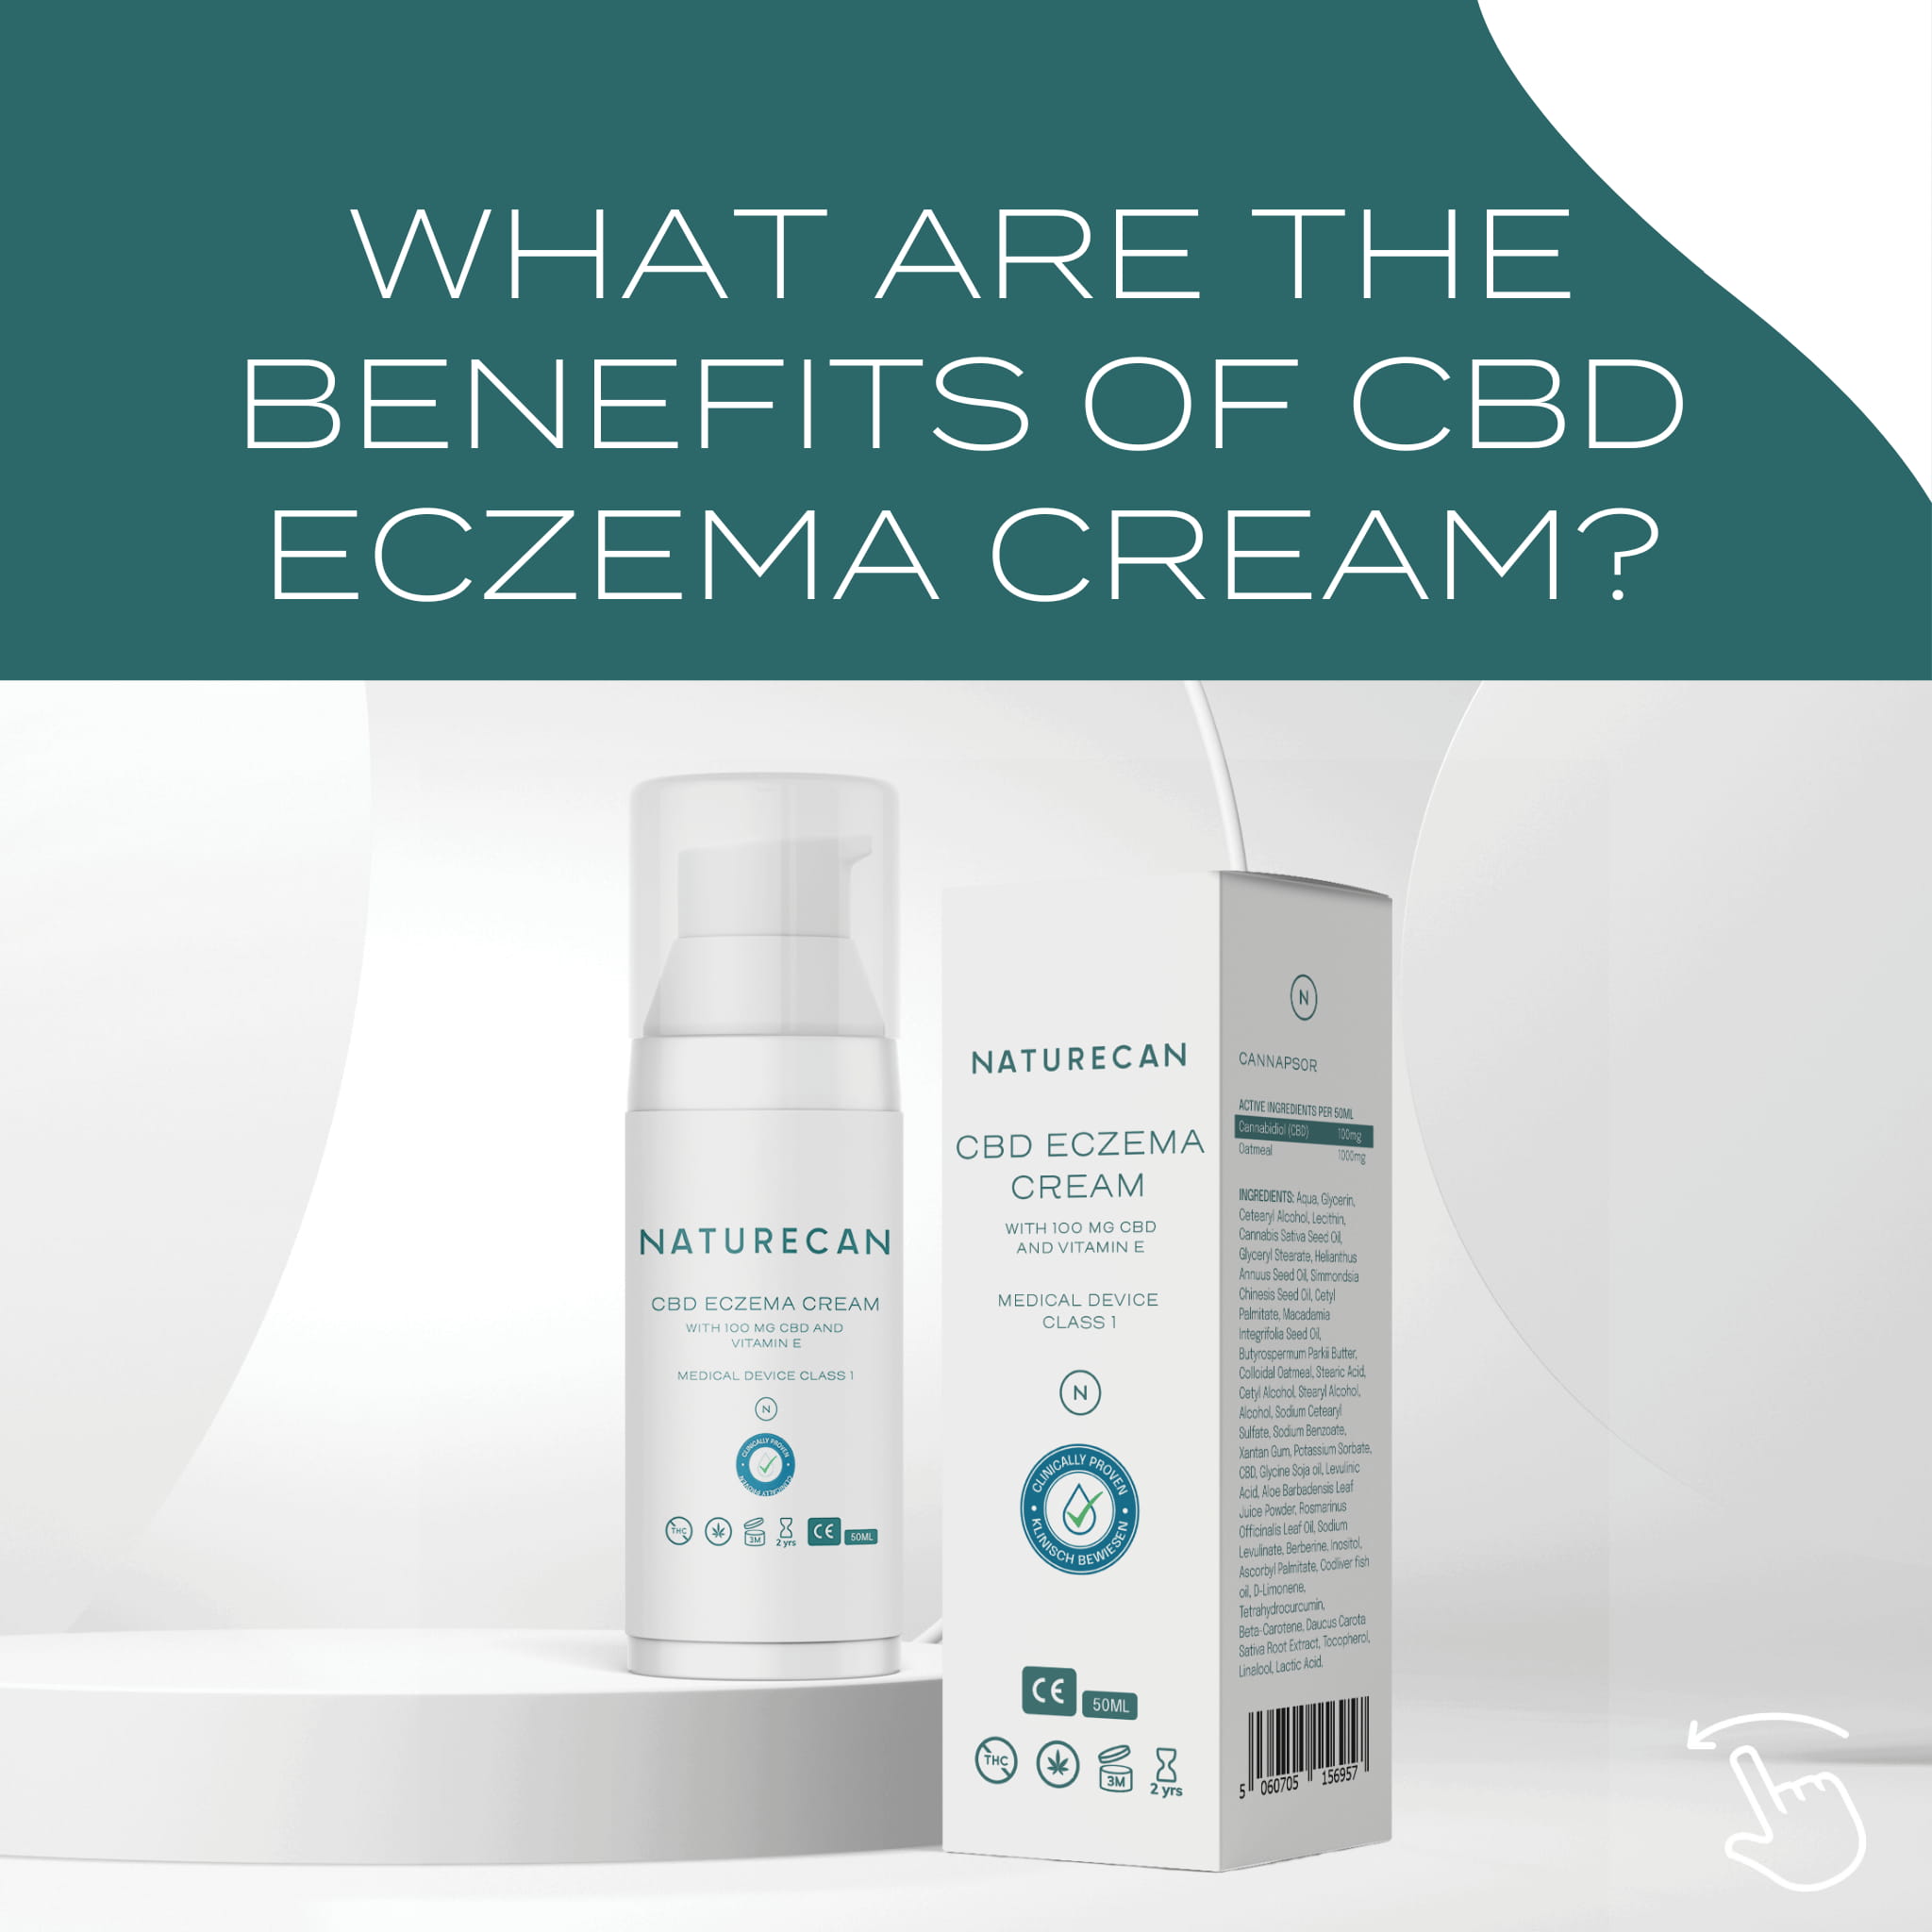 What are the benefits of CBD Eczema Cream?